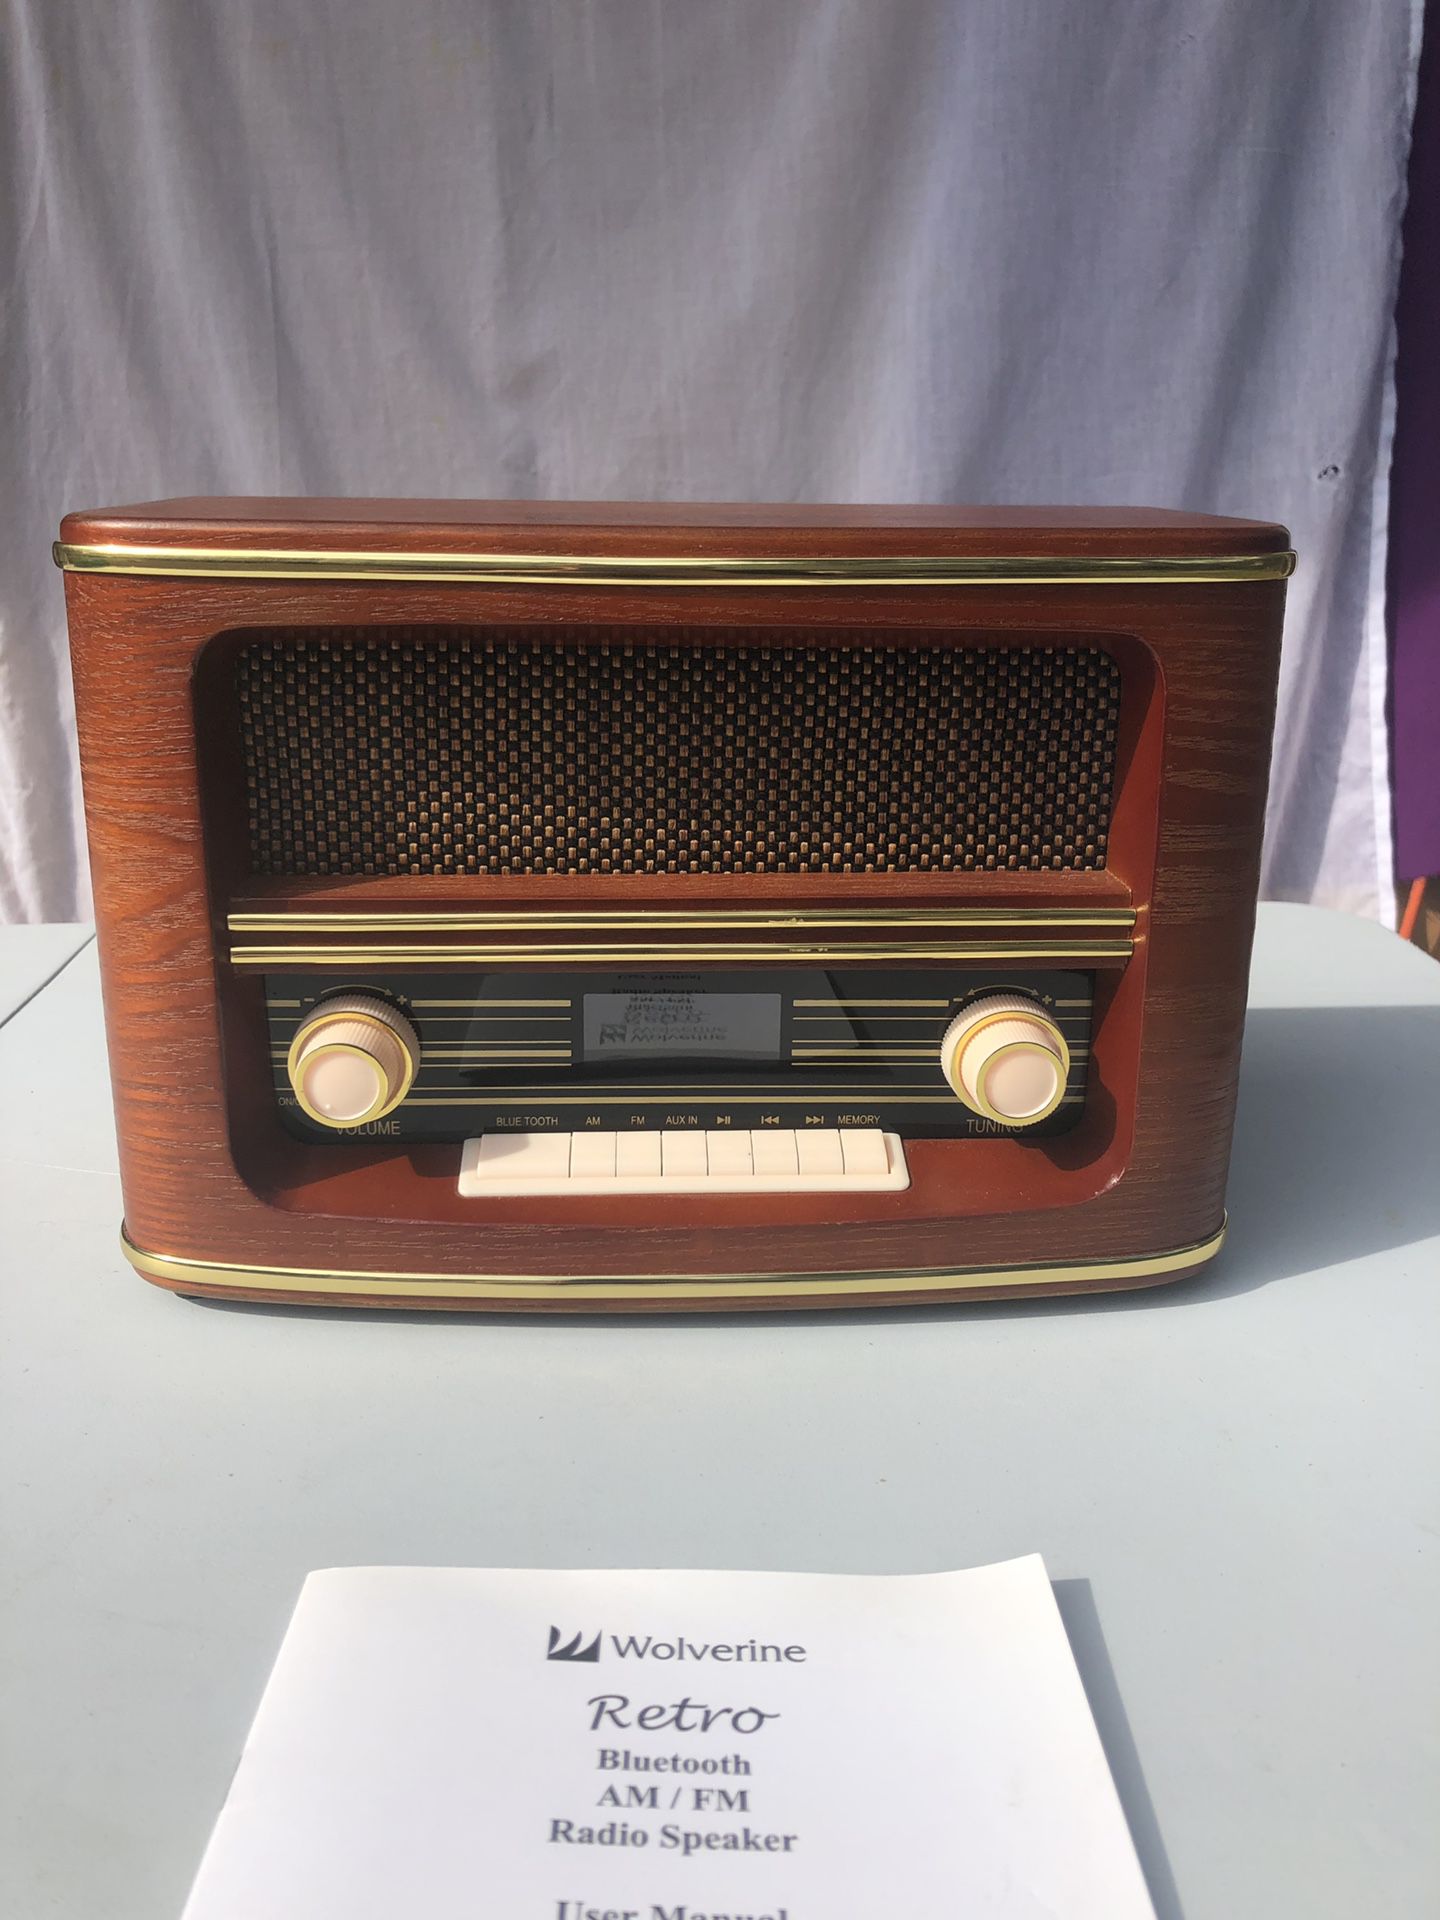 Wolverine retro radio speaker Bluetooth